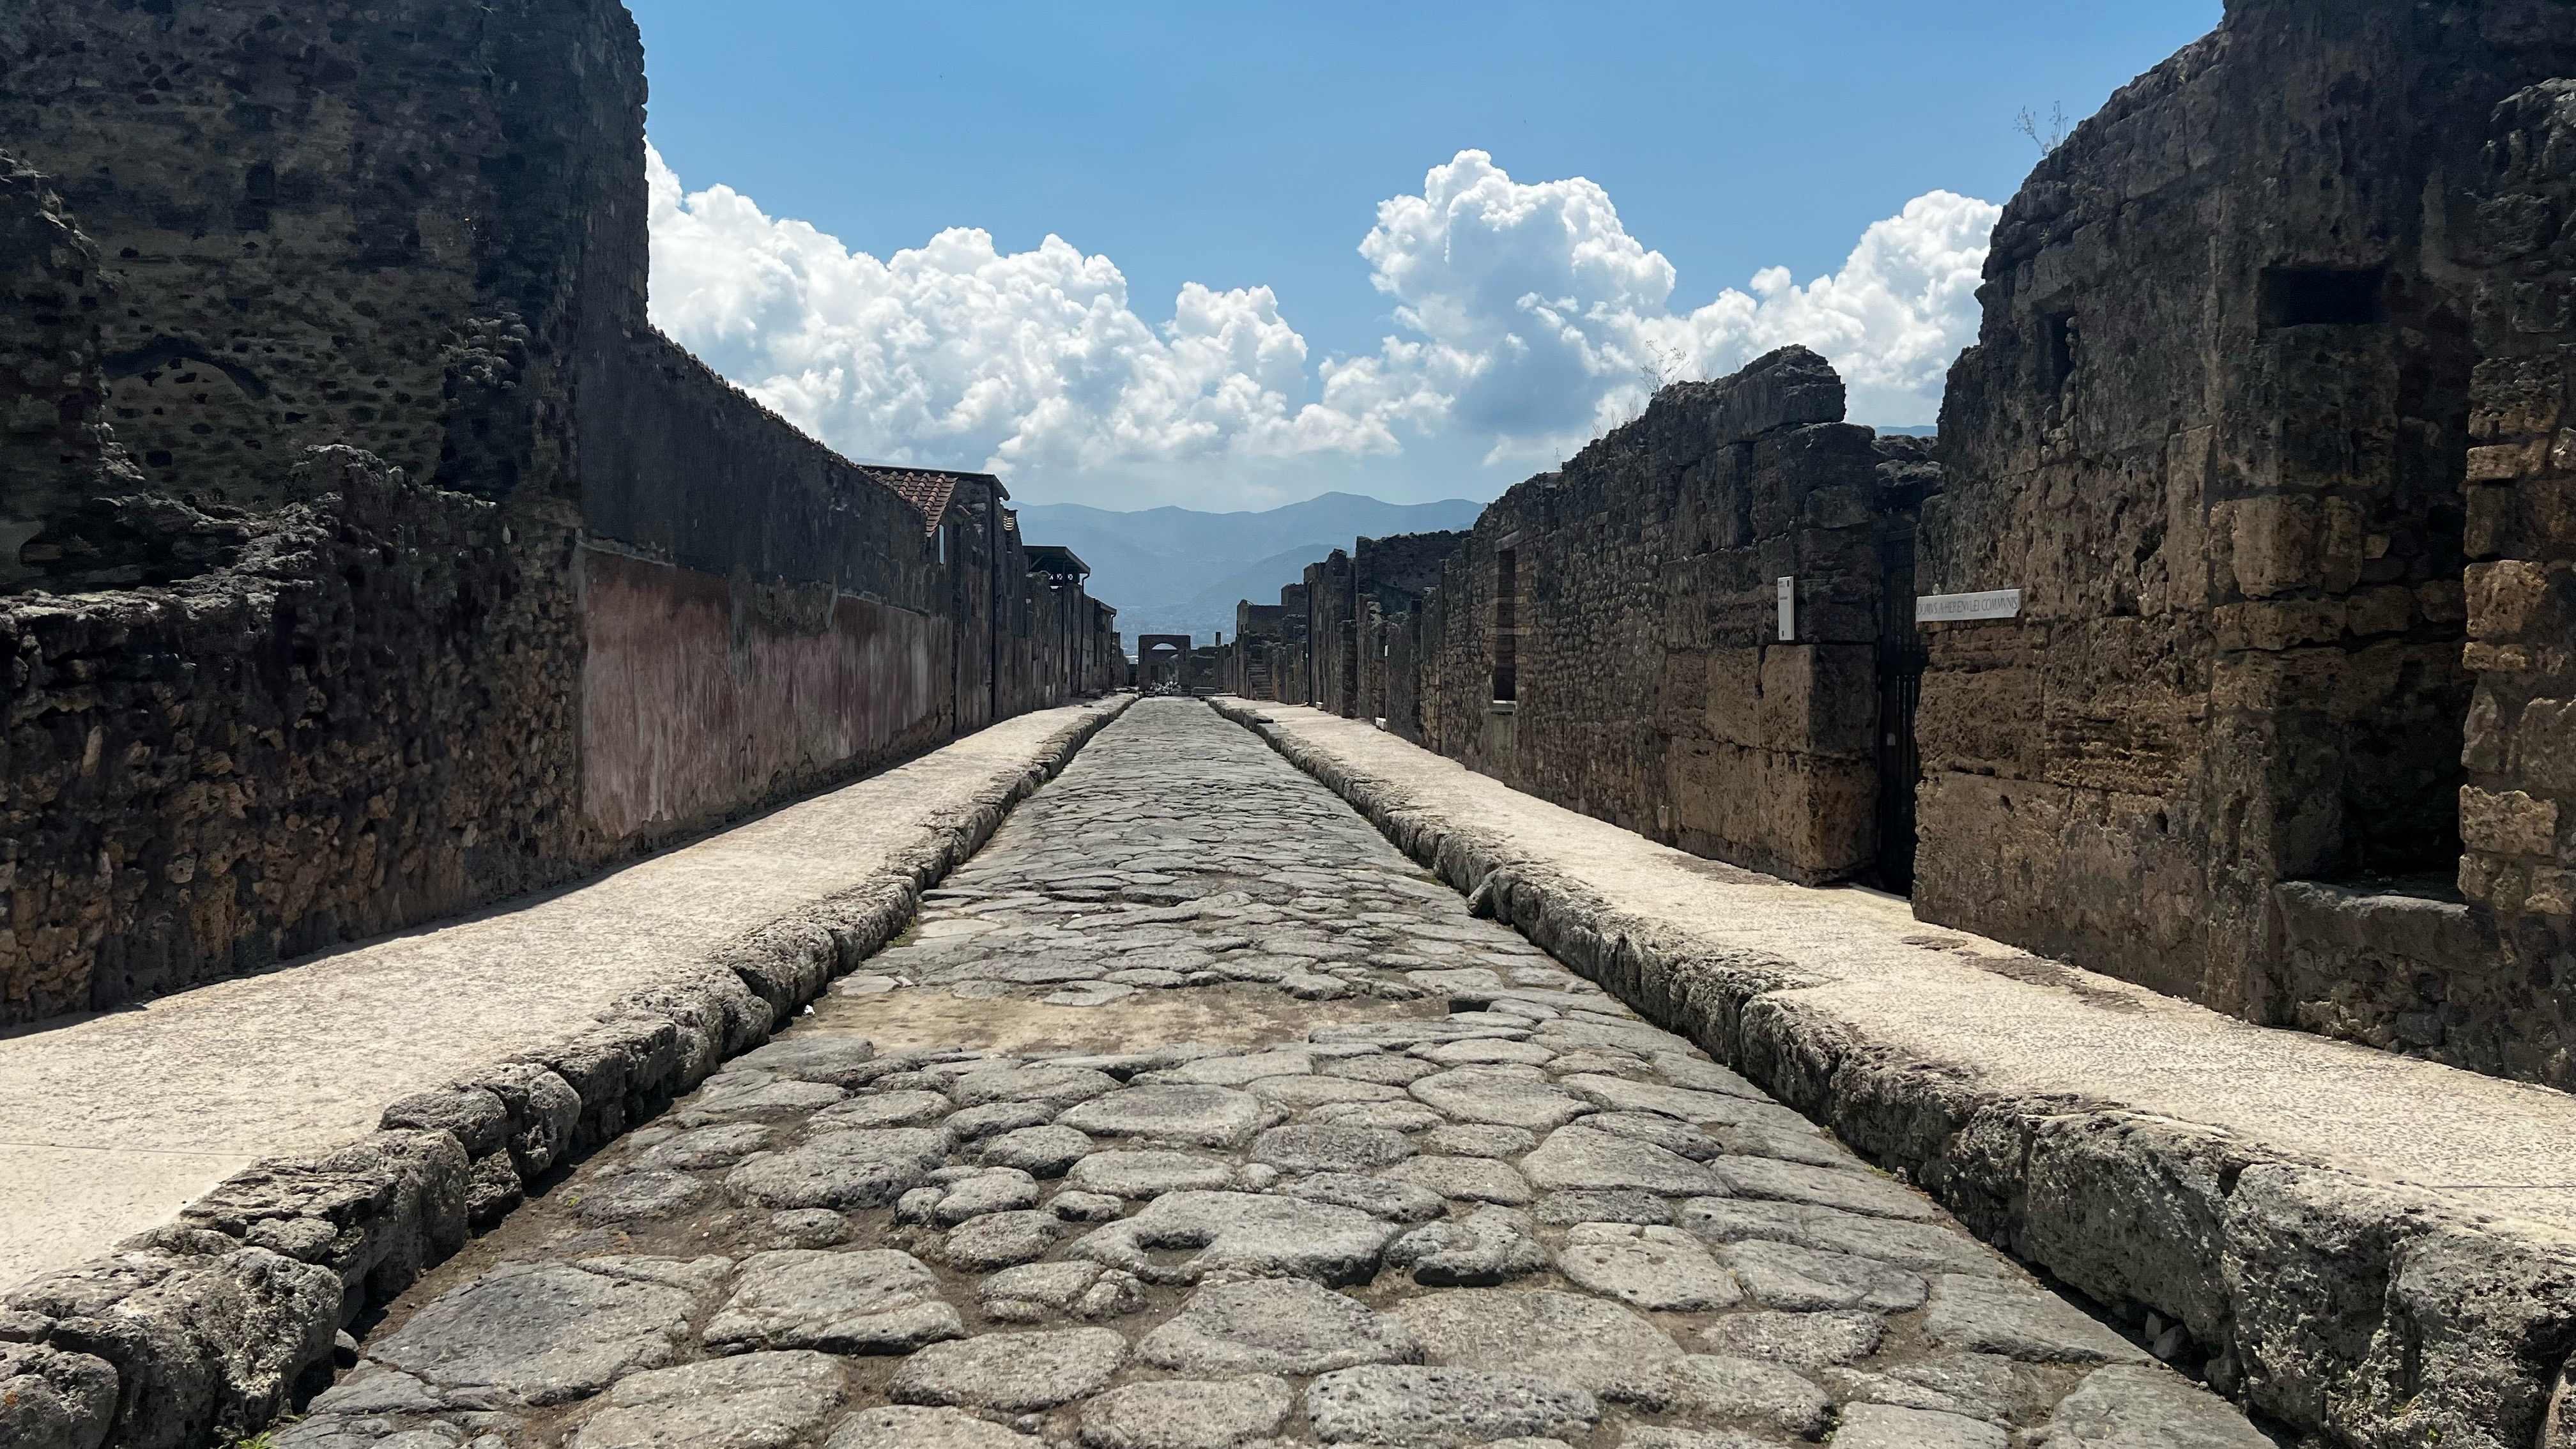 Category: Landscapes & Landmarks - Second Place / Category: Landscapes & Landmarks - Second Place - "Streets of Pompeii" by Jayceb Dhonau